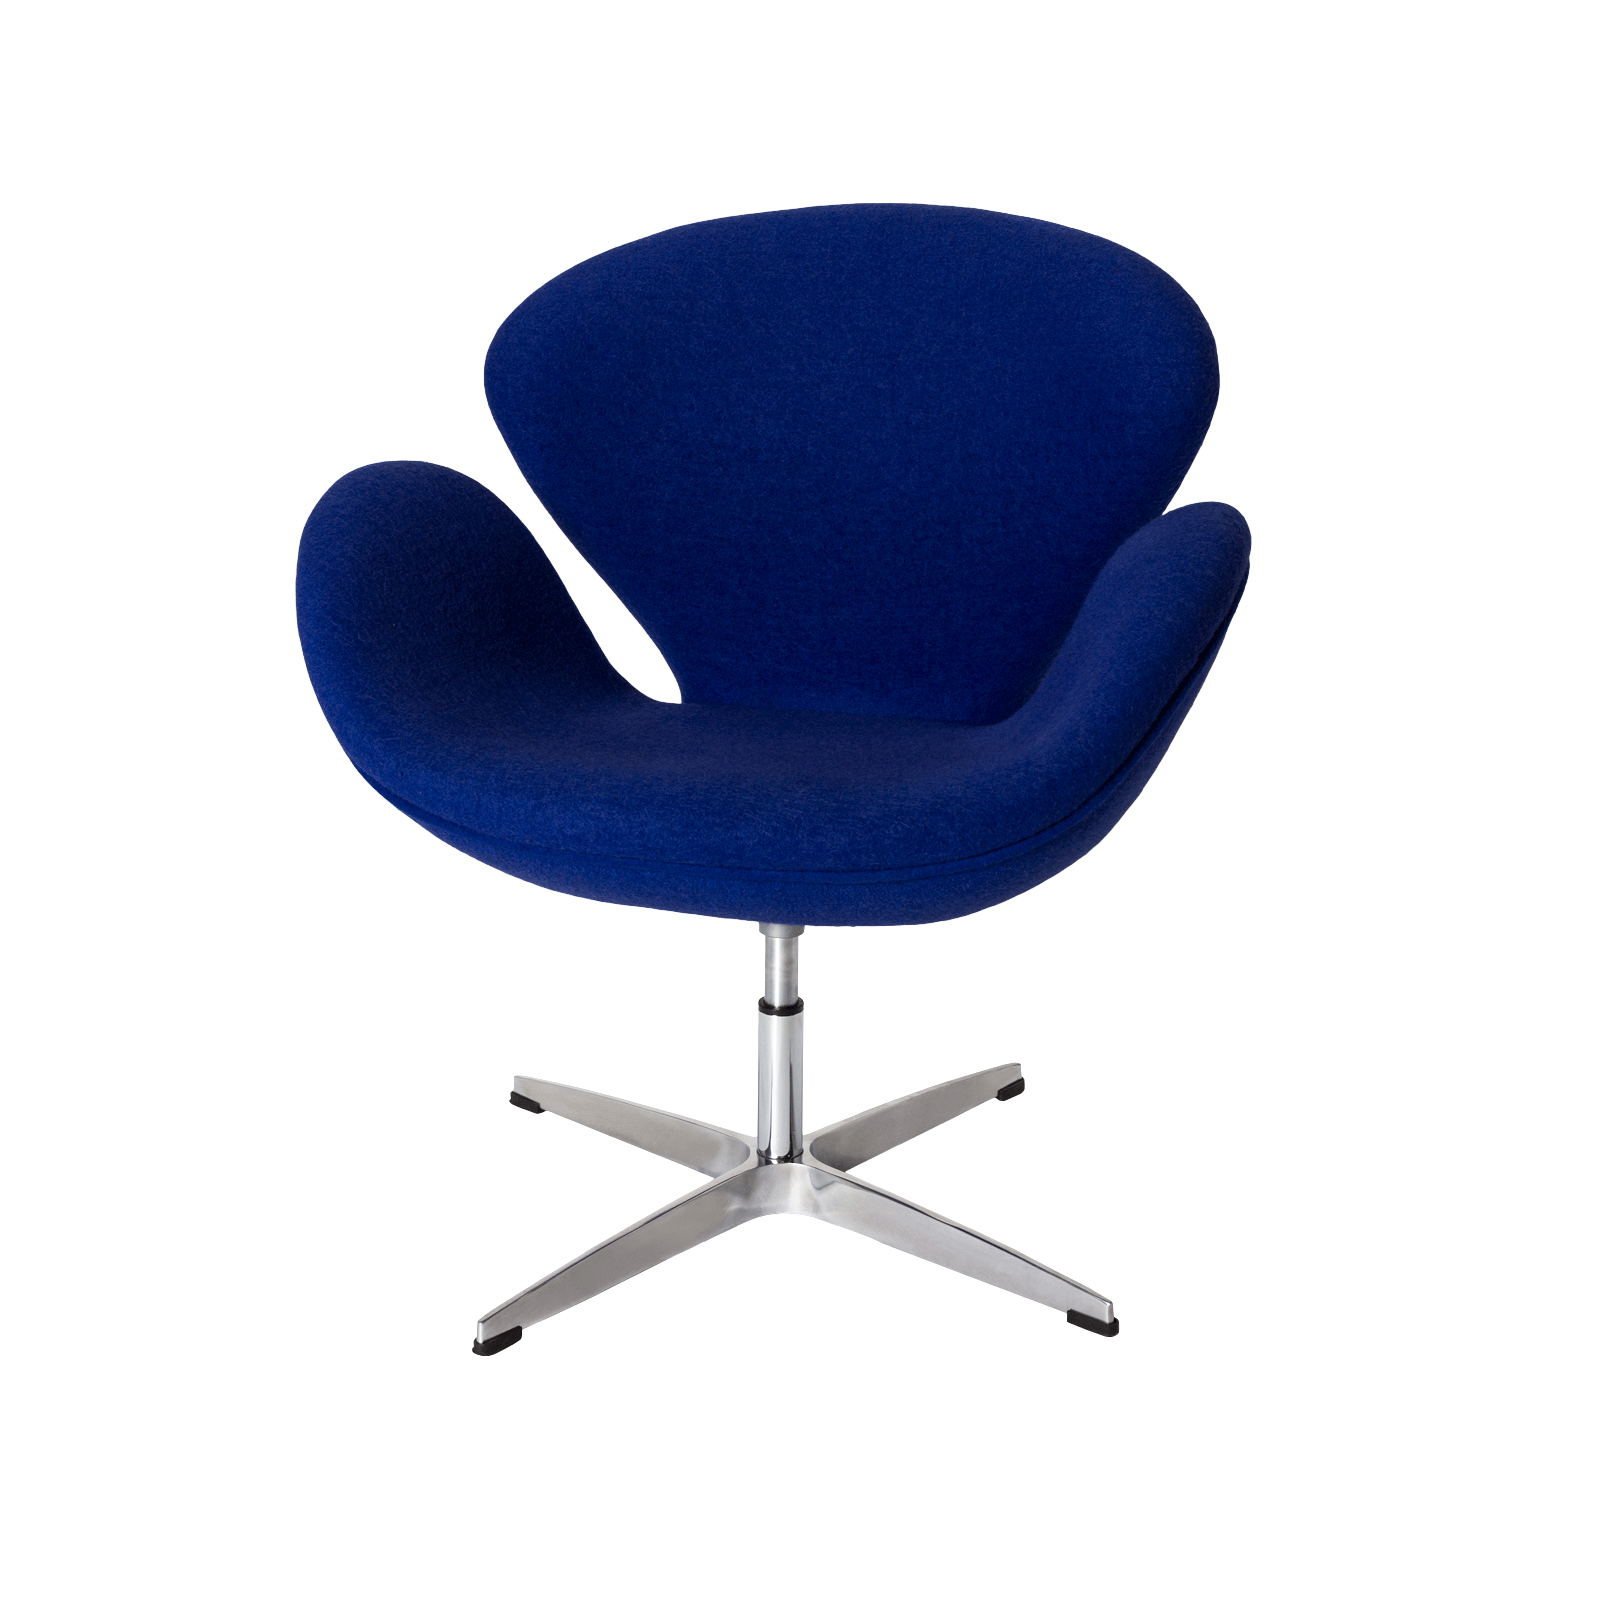 Arne Jacobsen Swan Chair (Indigo Blue) Event Trade Show